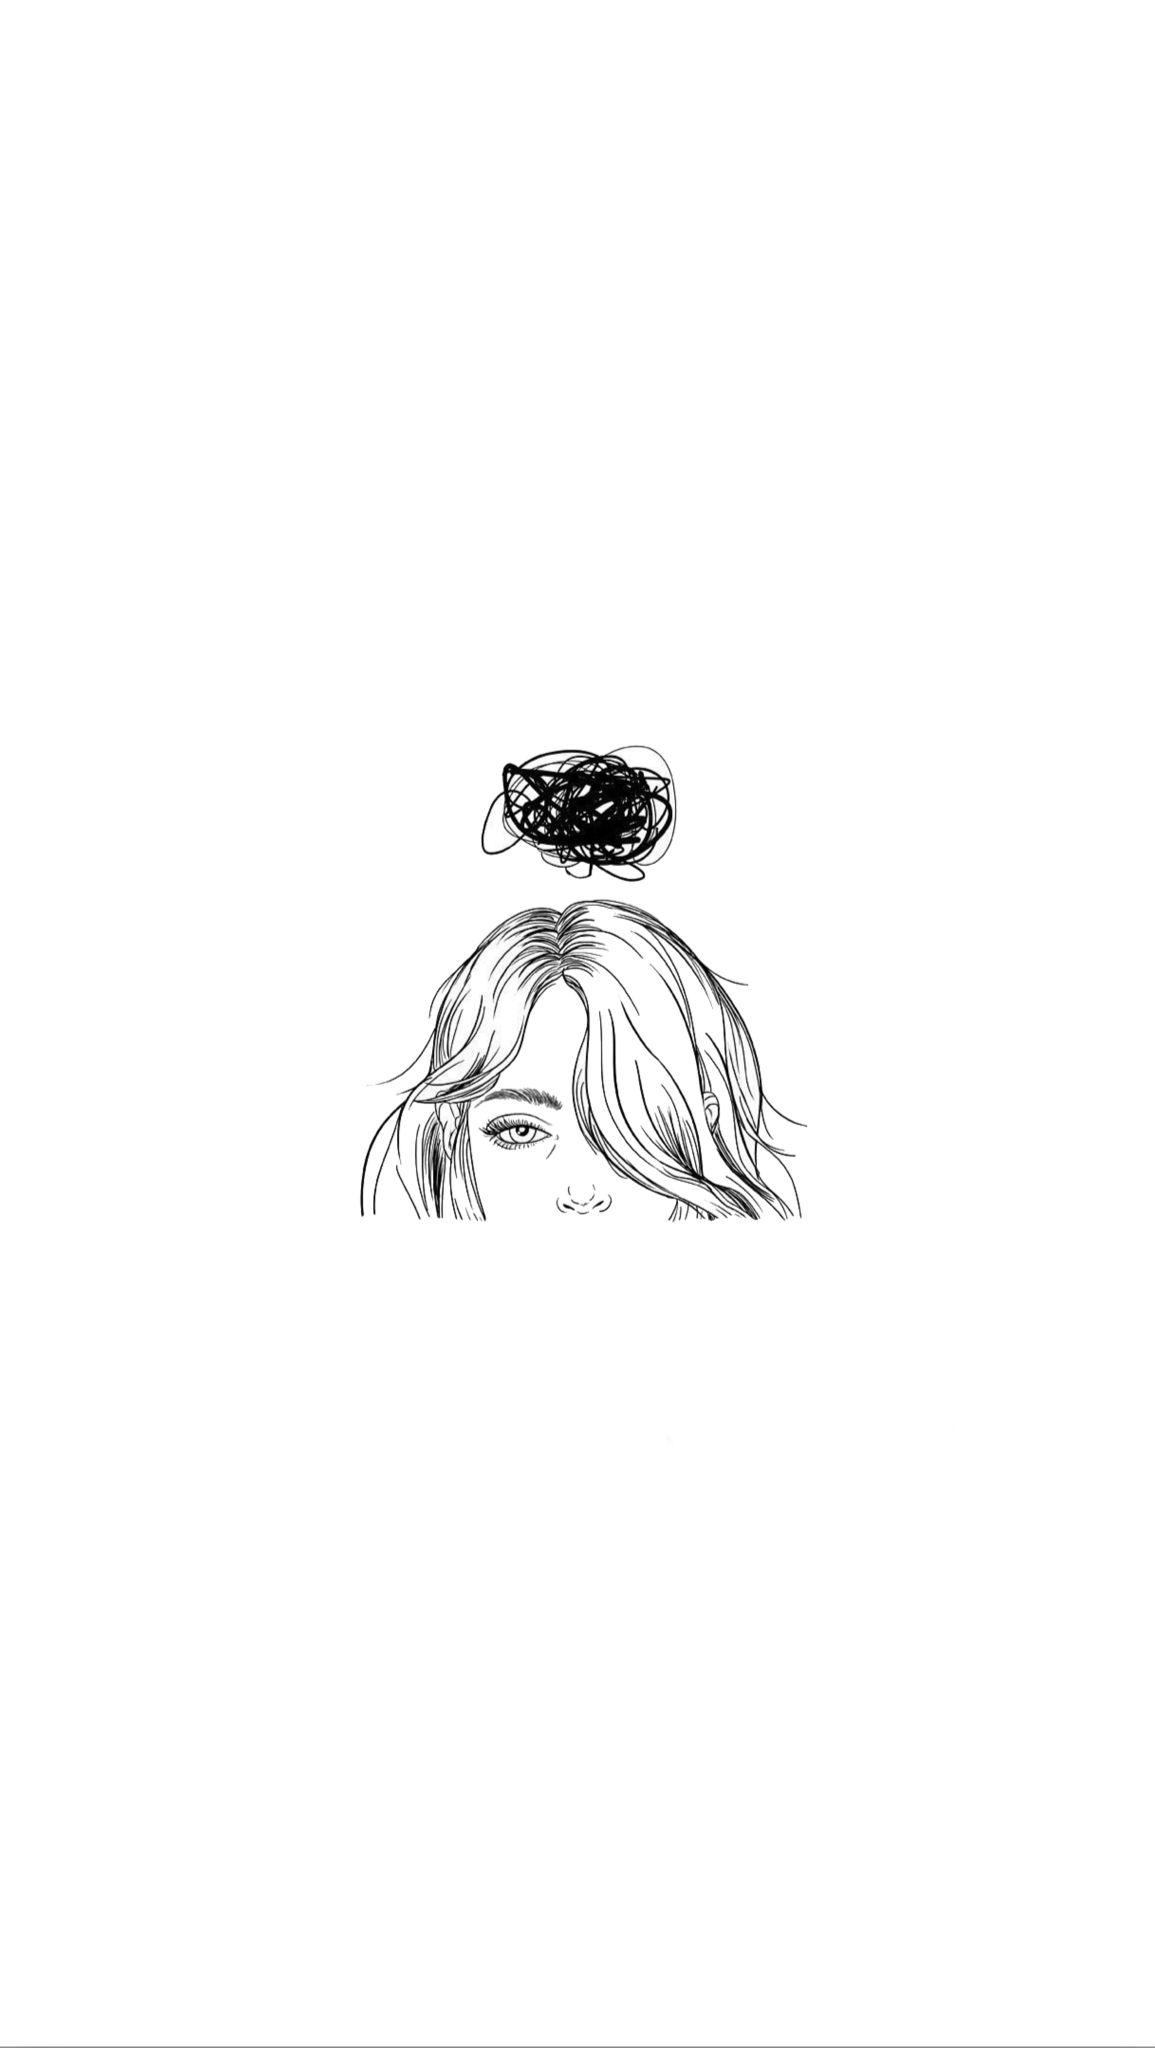 drawing of a girl tumblr hair